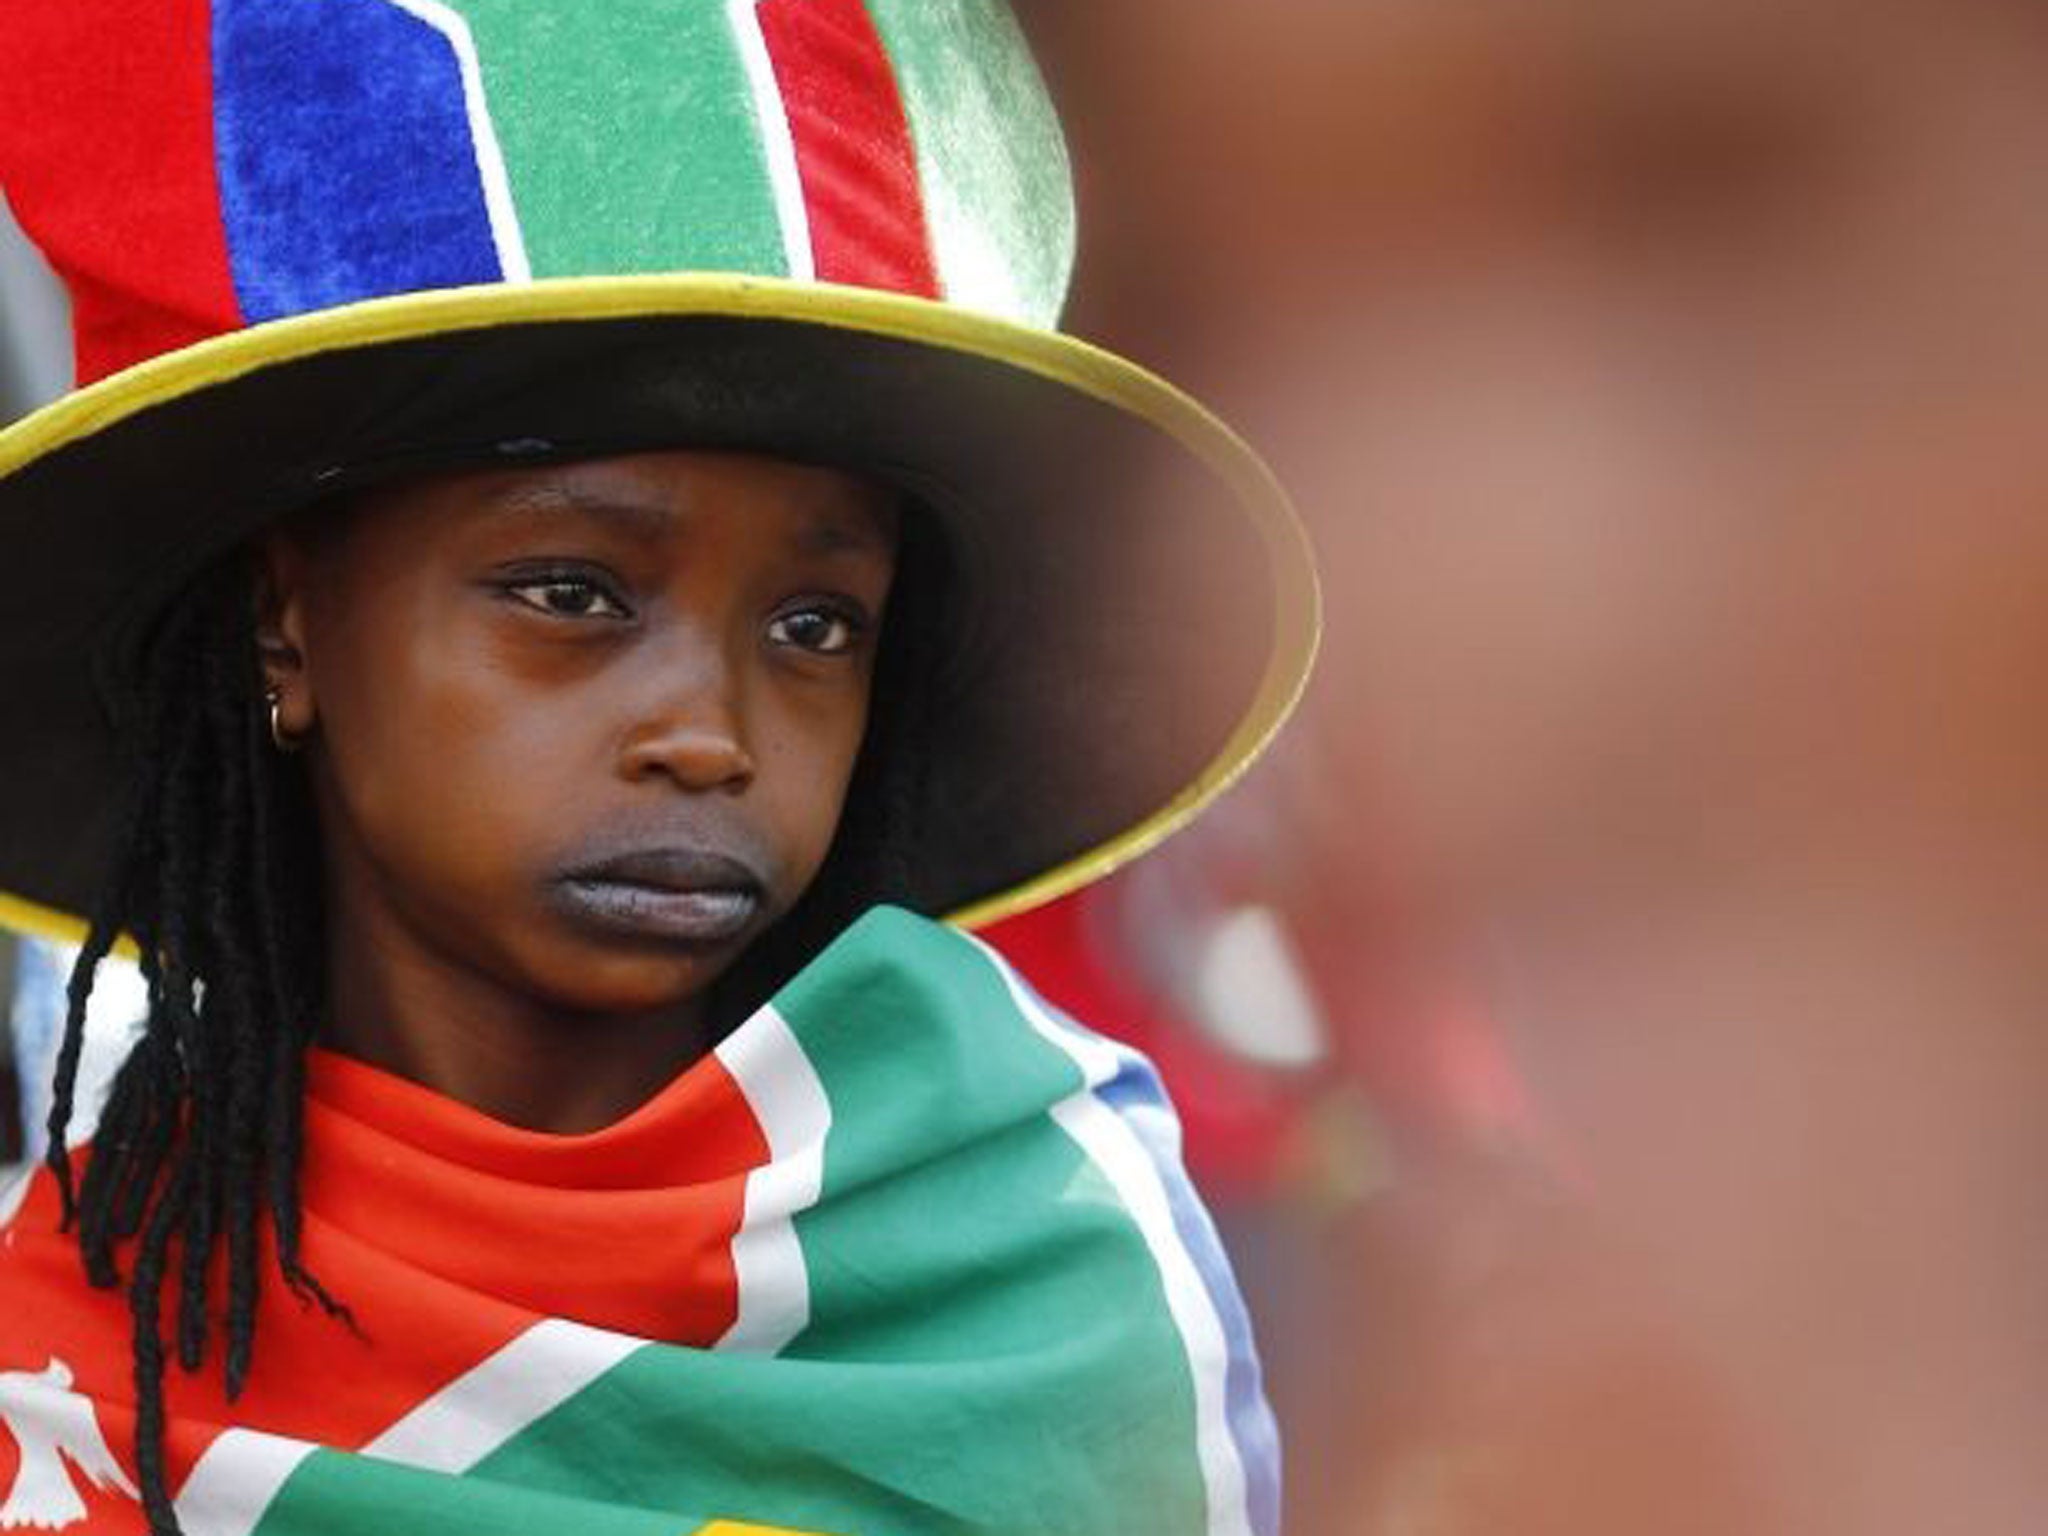 Tributes: A child in patriotic garb outside Mandela’s former home in Soweto